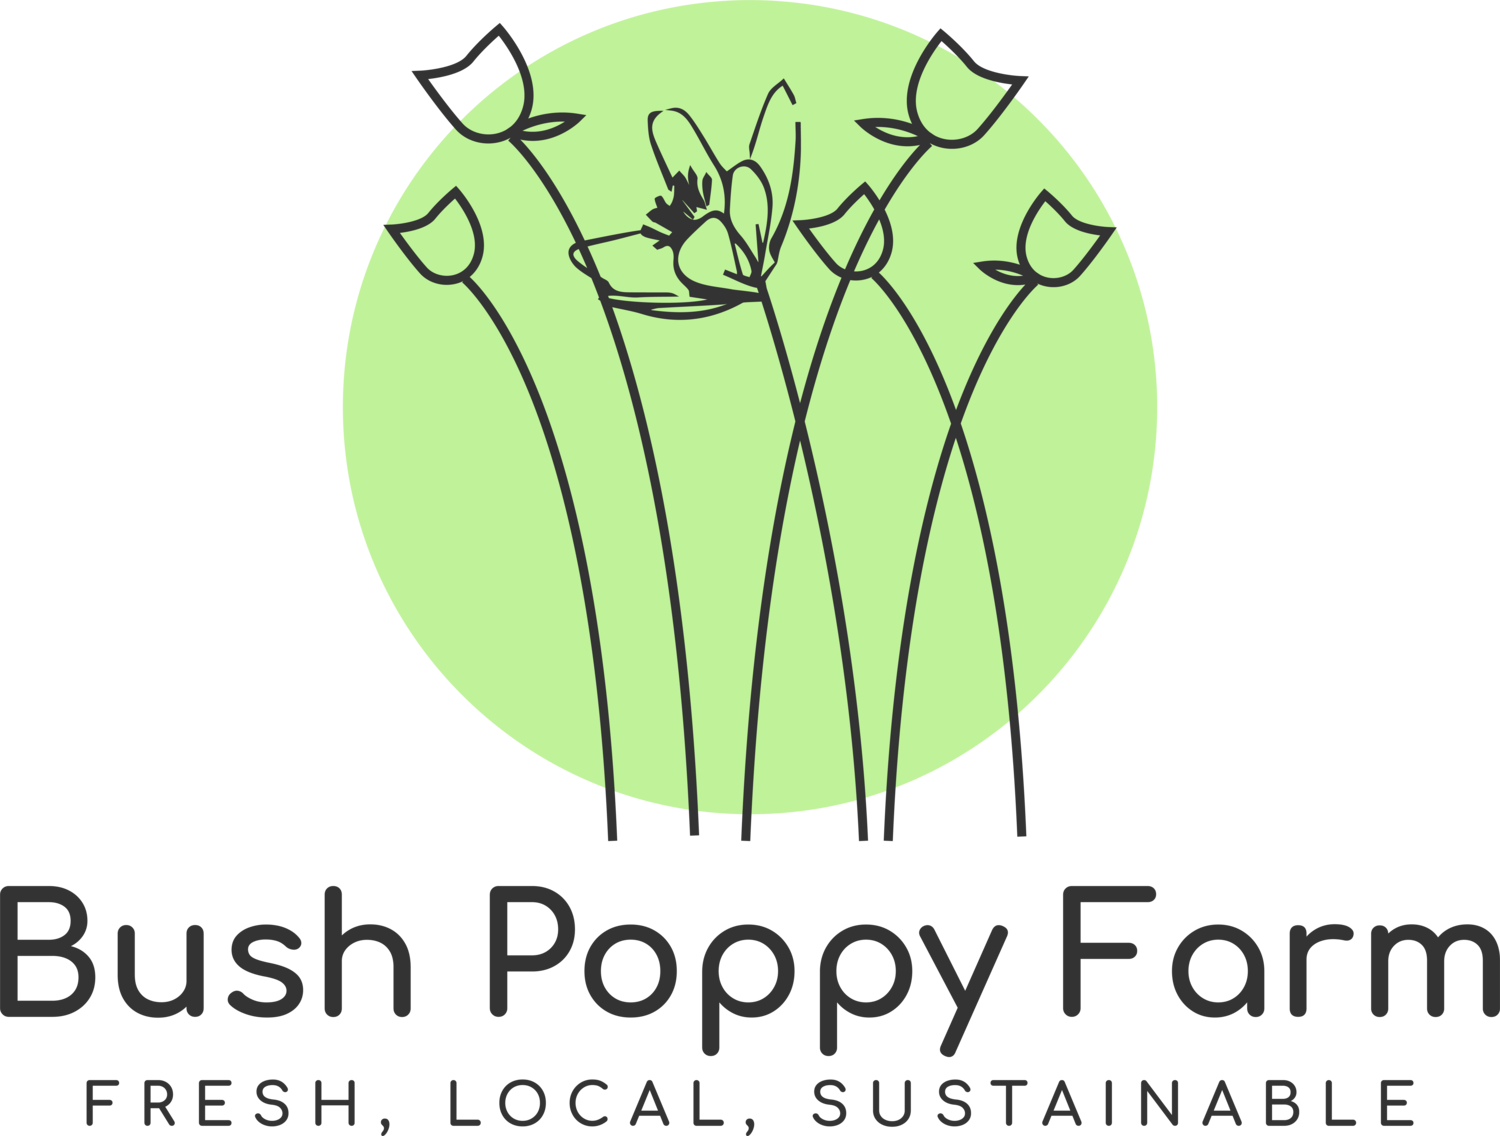 Bush Poppy Farm